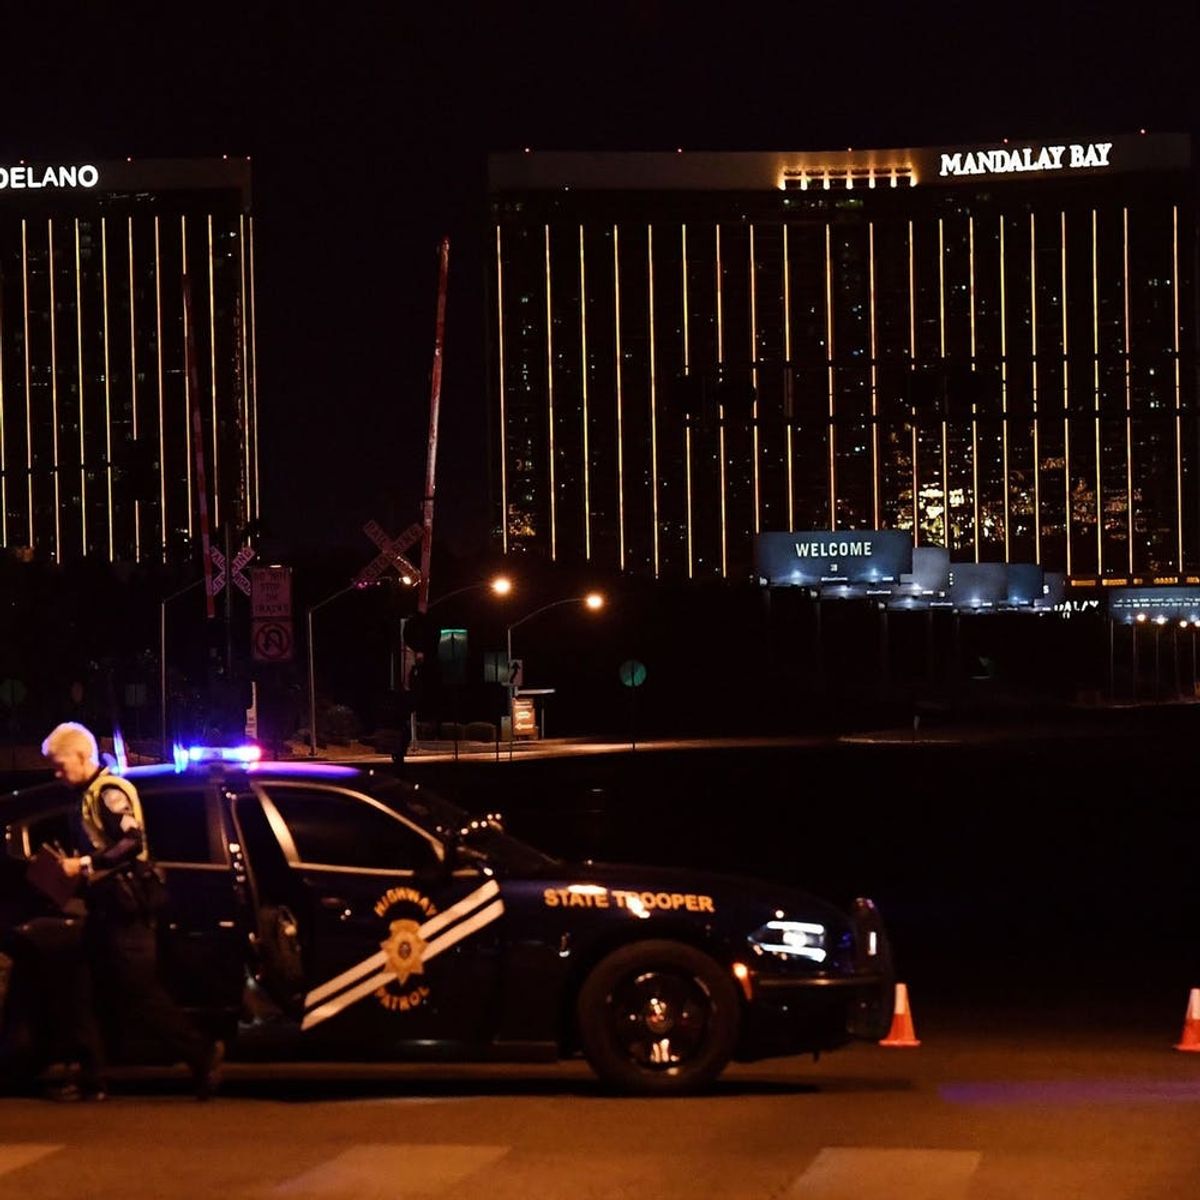 Las Vegas Concert Shooting Leaves 58 Dead and 515 Injured